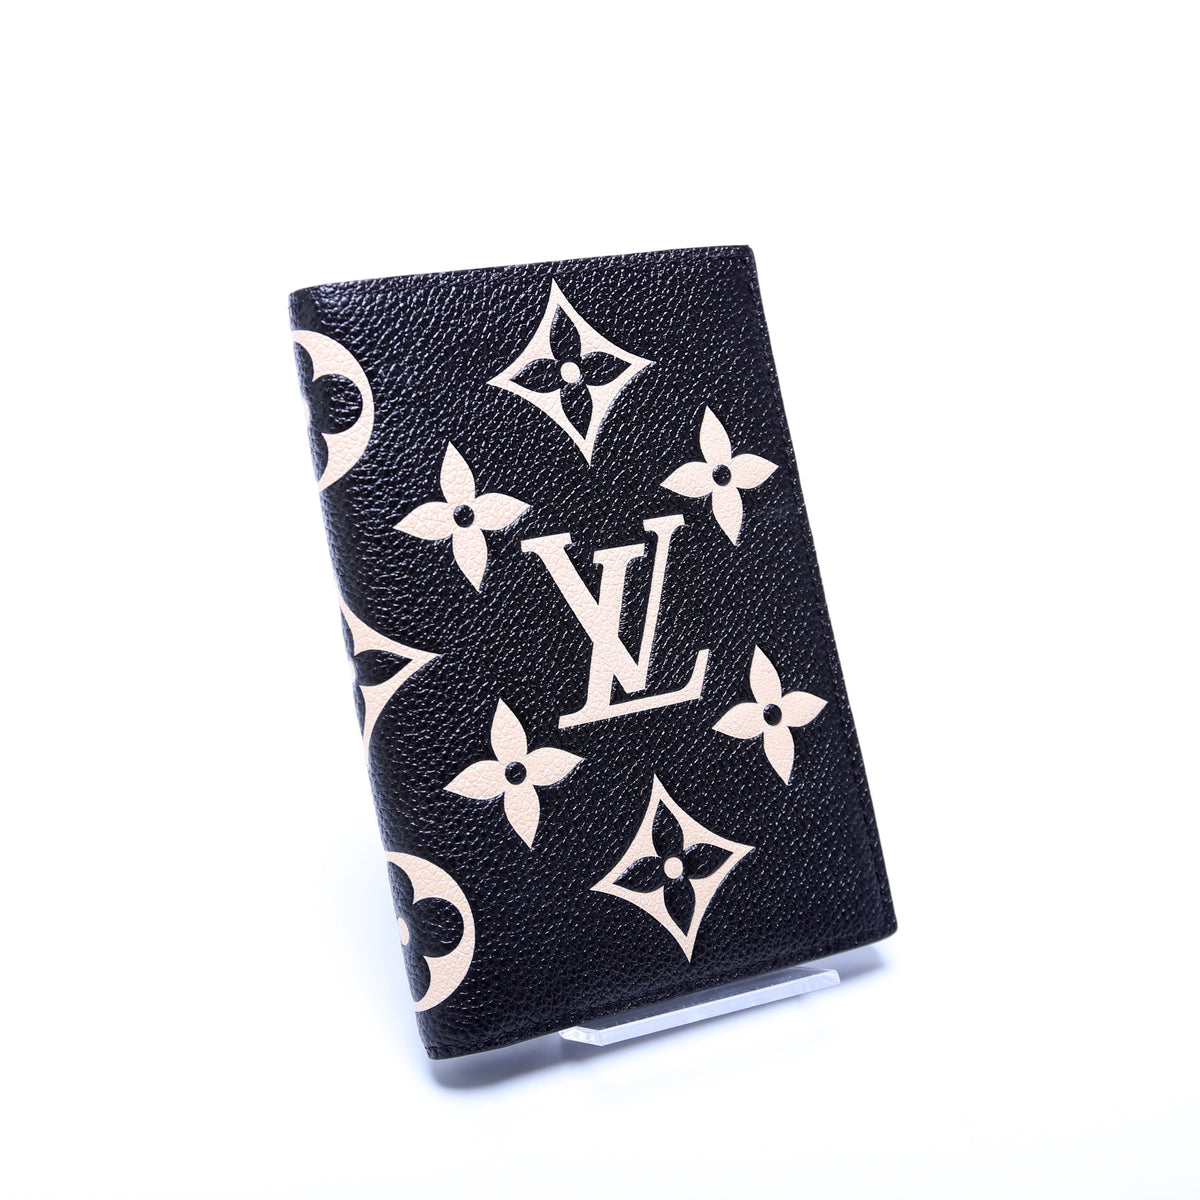 Passport Cover - Luxury Monogram Empreinte Leather Black